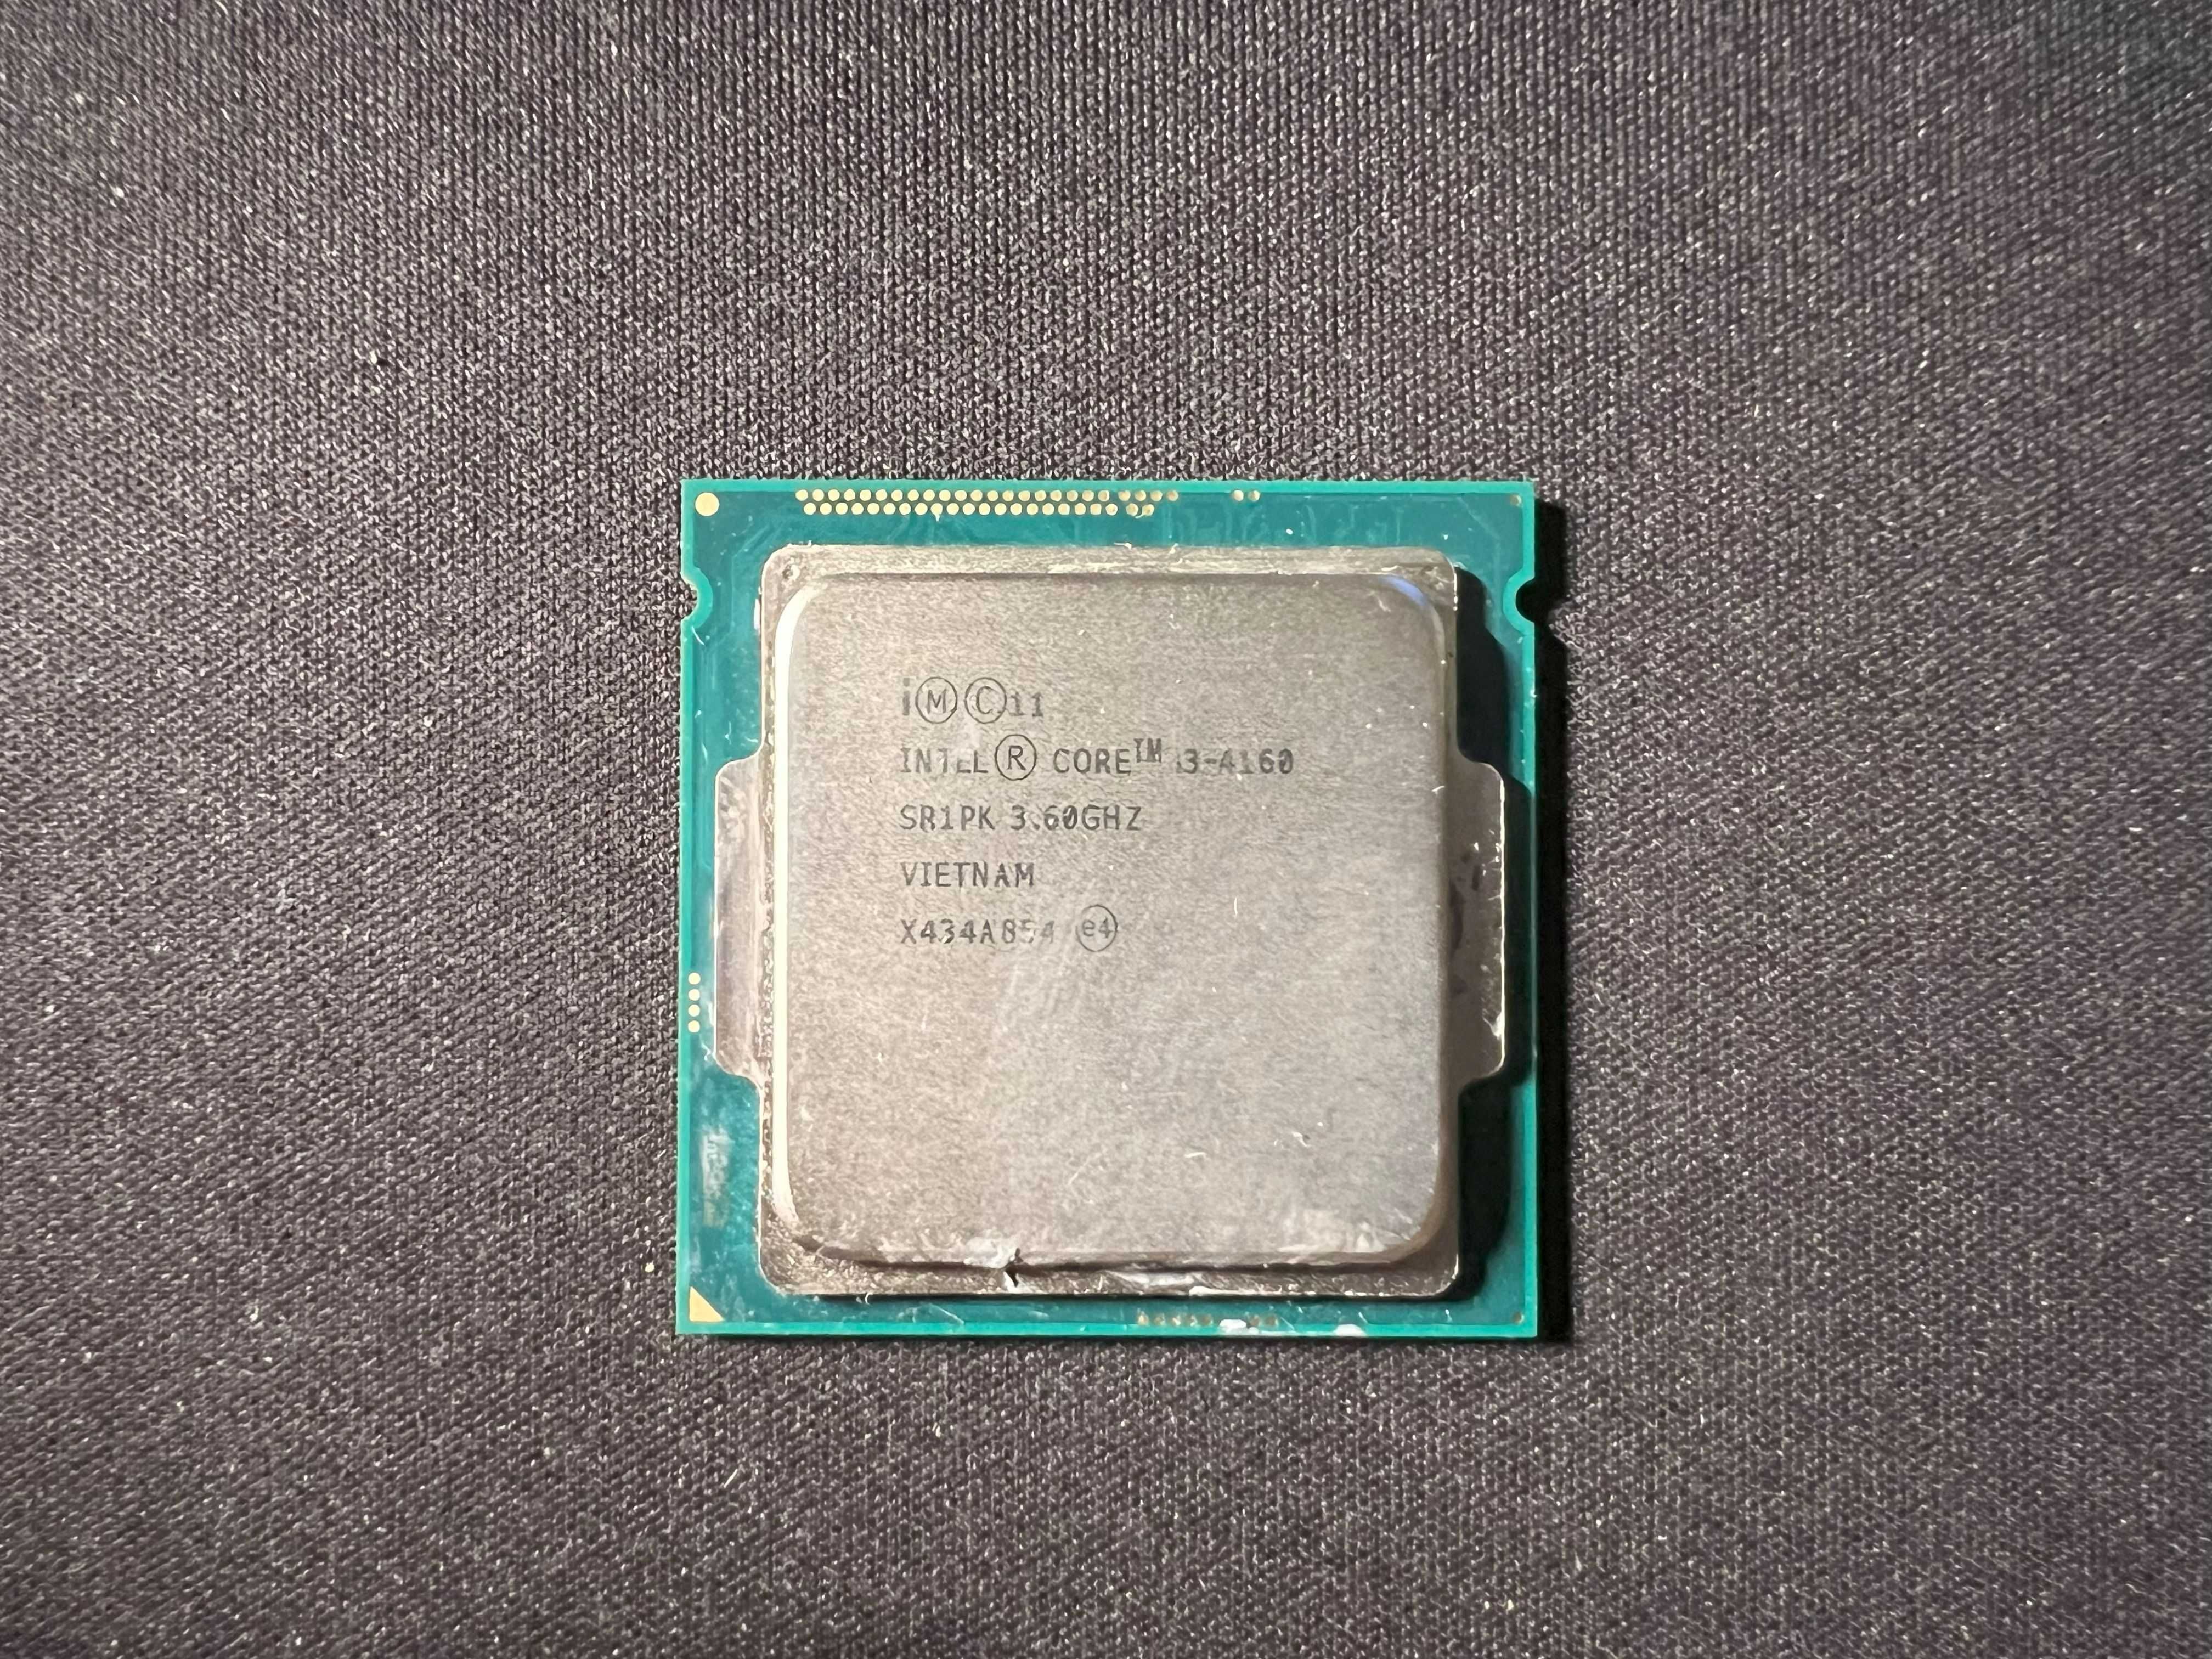 Procesor Intel i3-4160, 3,6GHz, 3mb cache, LGA1150, BOX, wiatrak